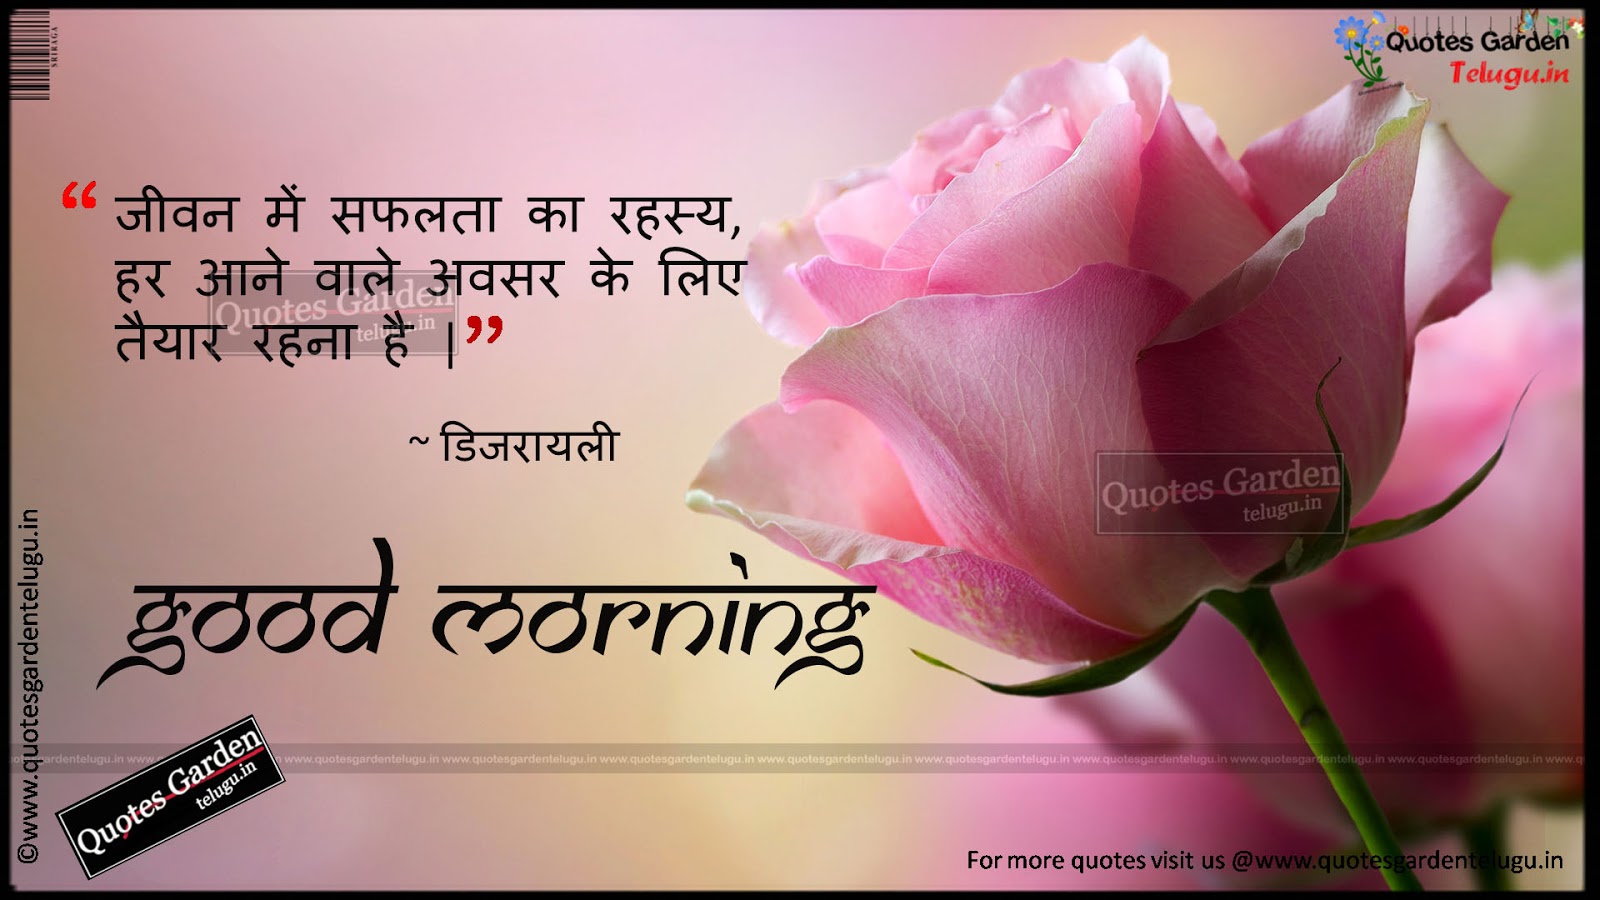 Good morning messages Quotes sms shayari in hindi | QUOTES GARDEN ...